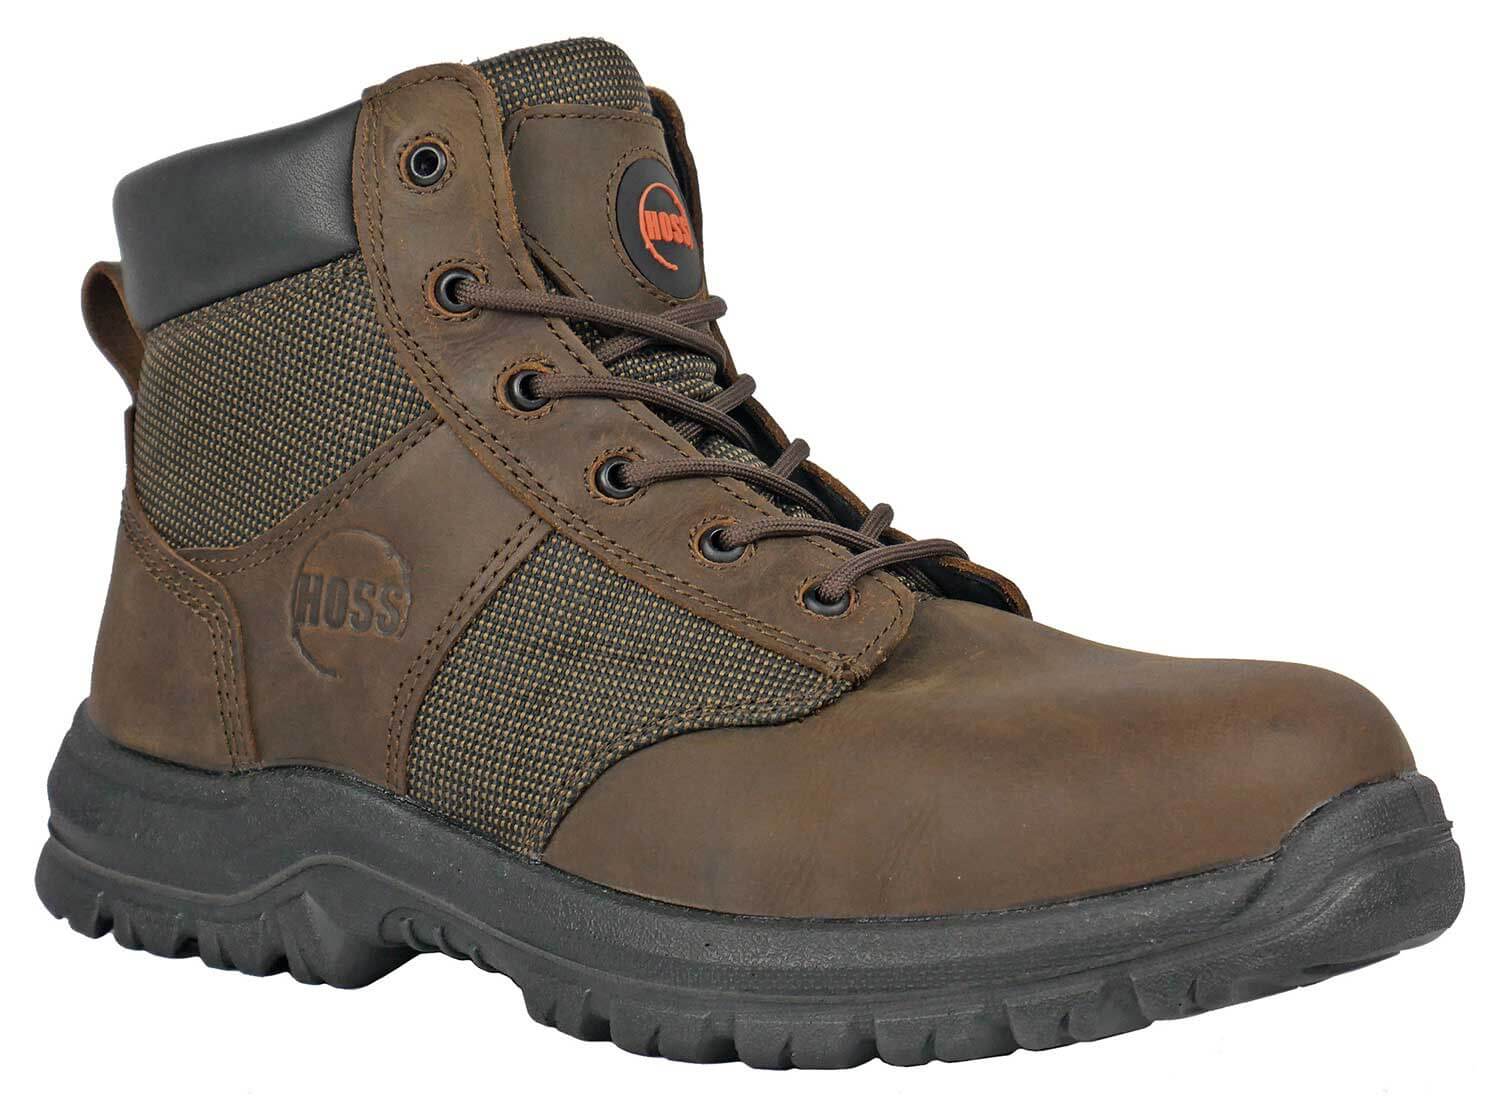 Hoss Boots Carter Brown Side Mesh - 60542 - Men's 6 Steel Toe Slip Resistant Work Boot